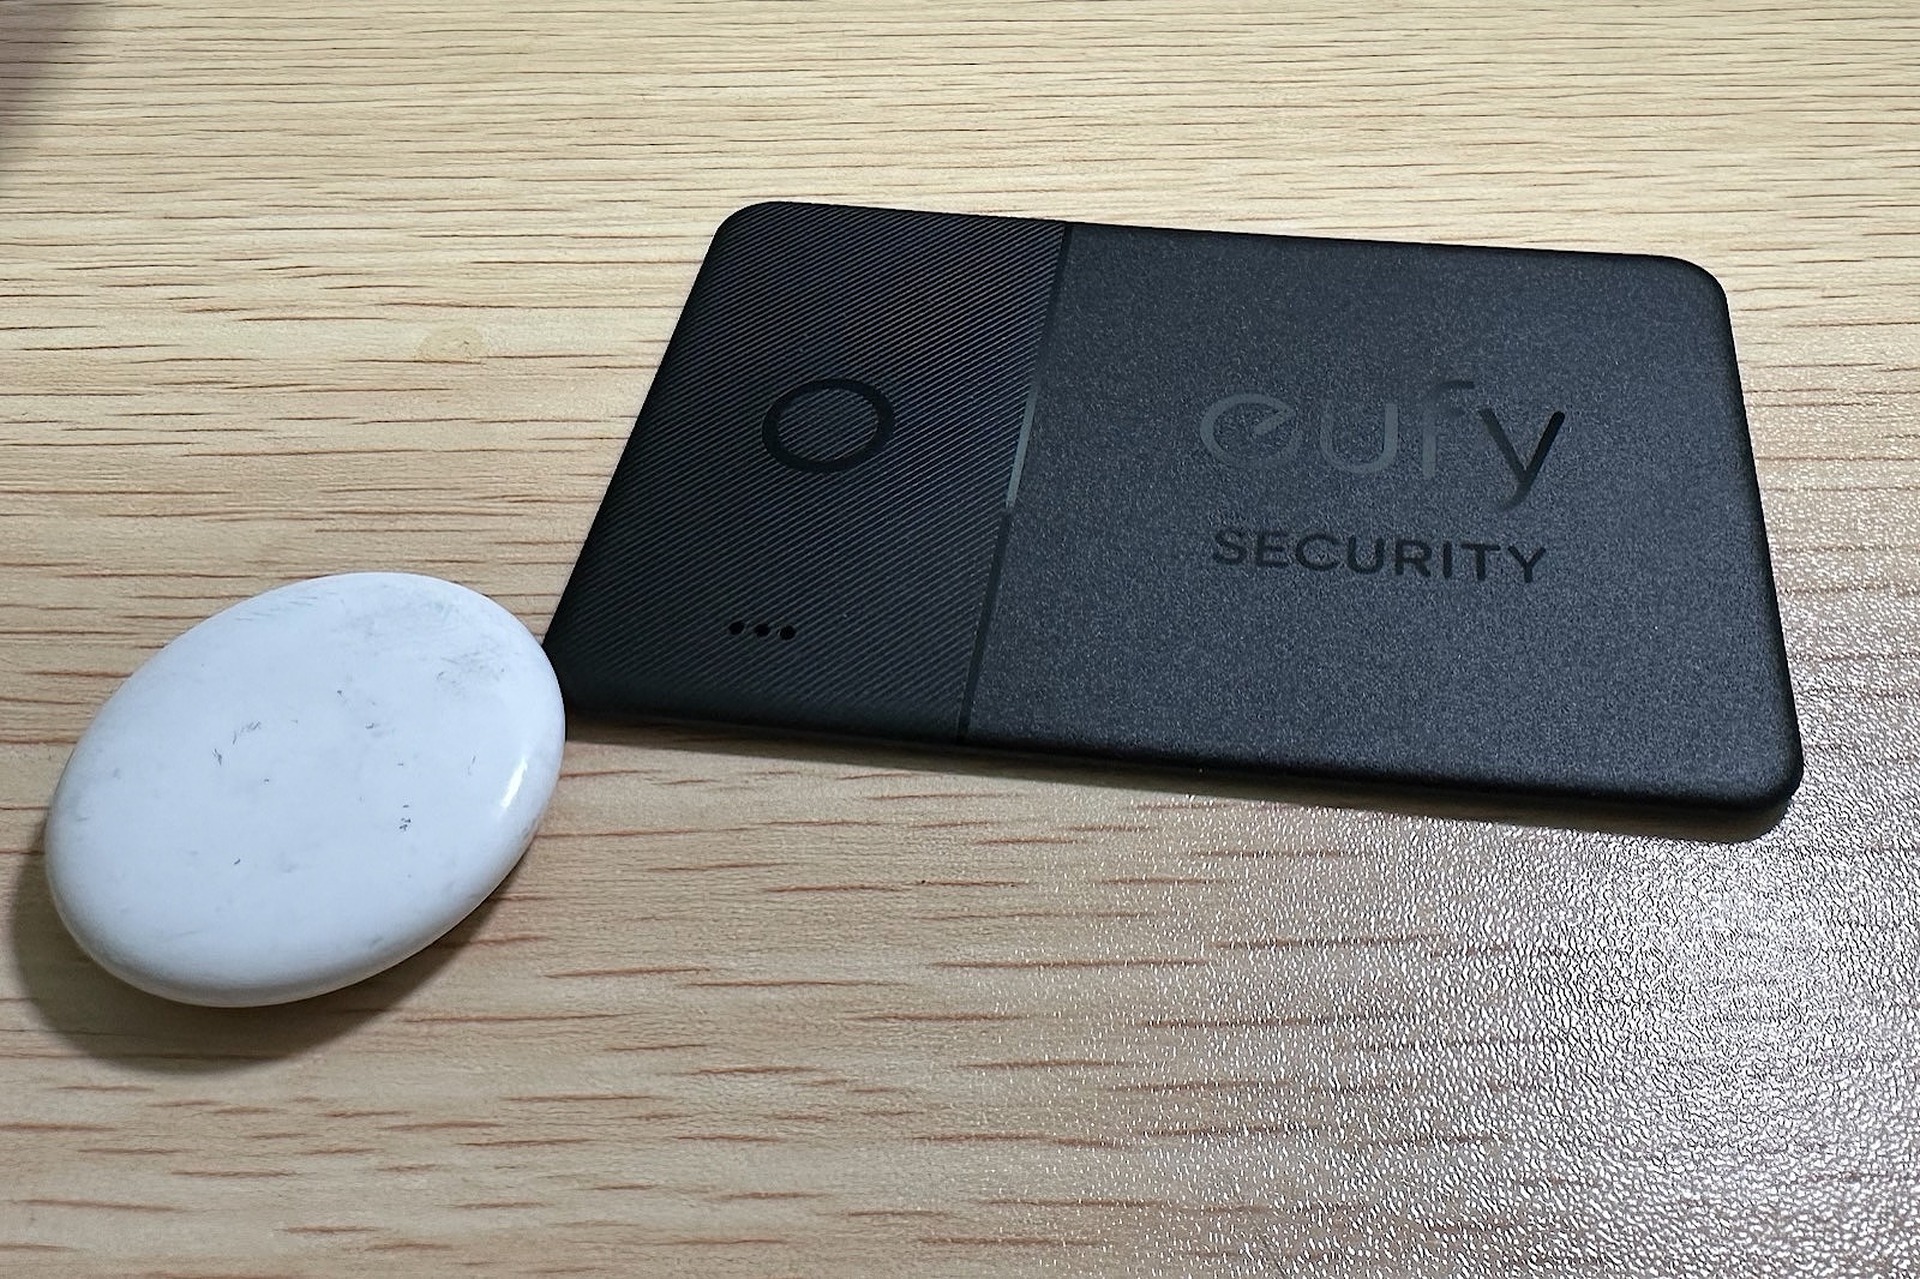 Ankerのカード型忘れ物防止タグ「Eufy Security SmartTrack Card」は ...